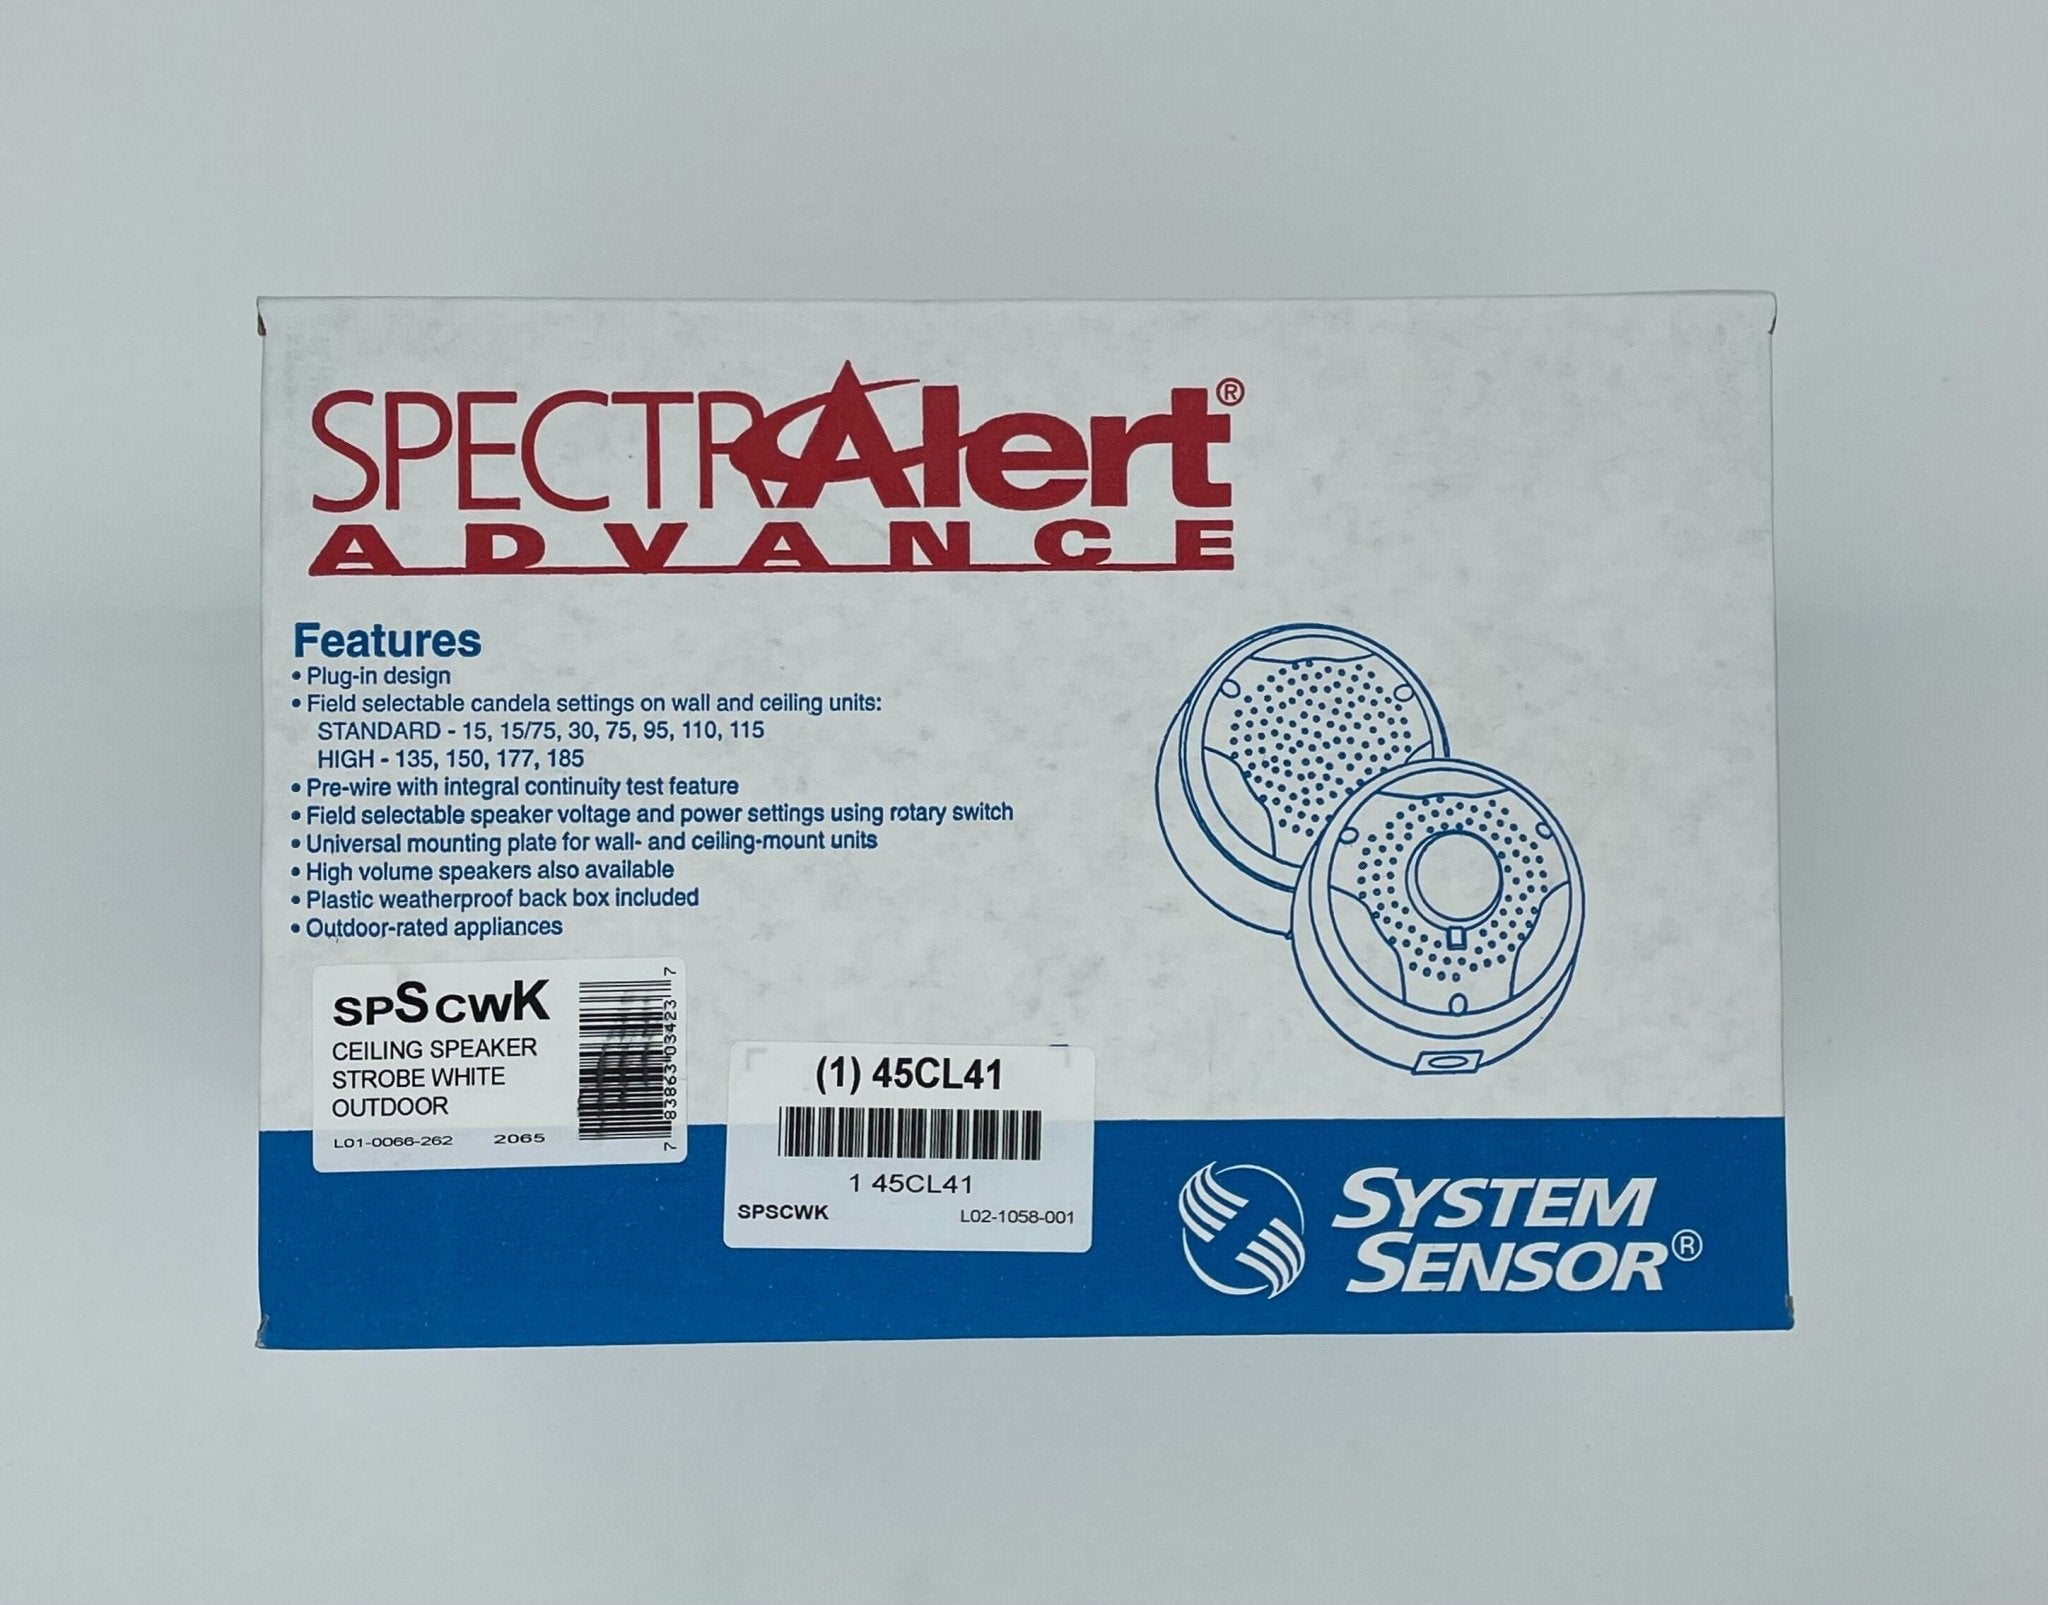 System Sensor SPSCWK - The Fire Alarm Supplier